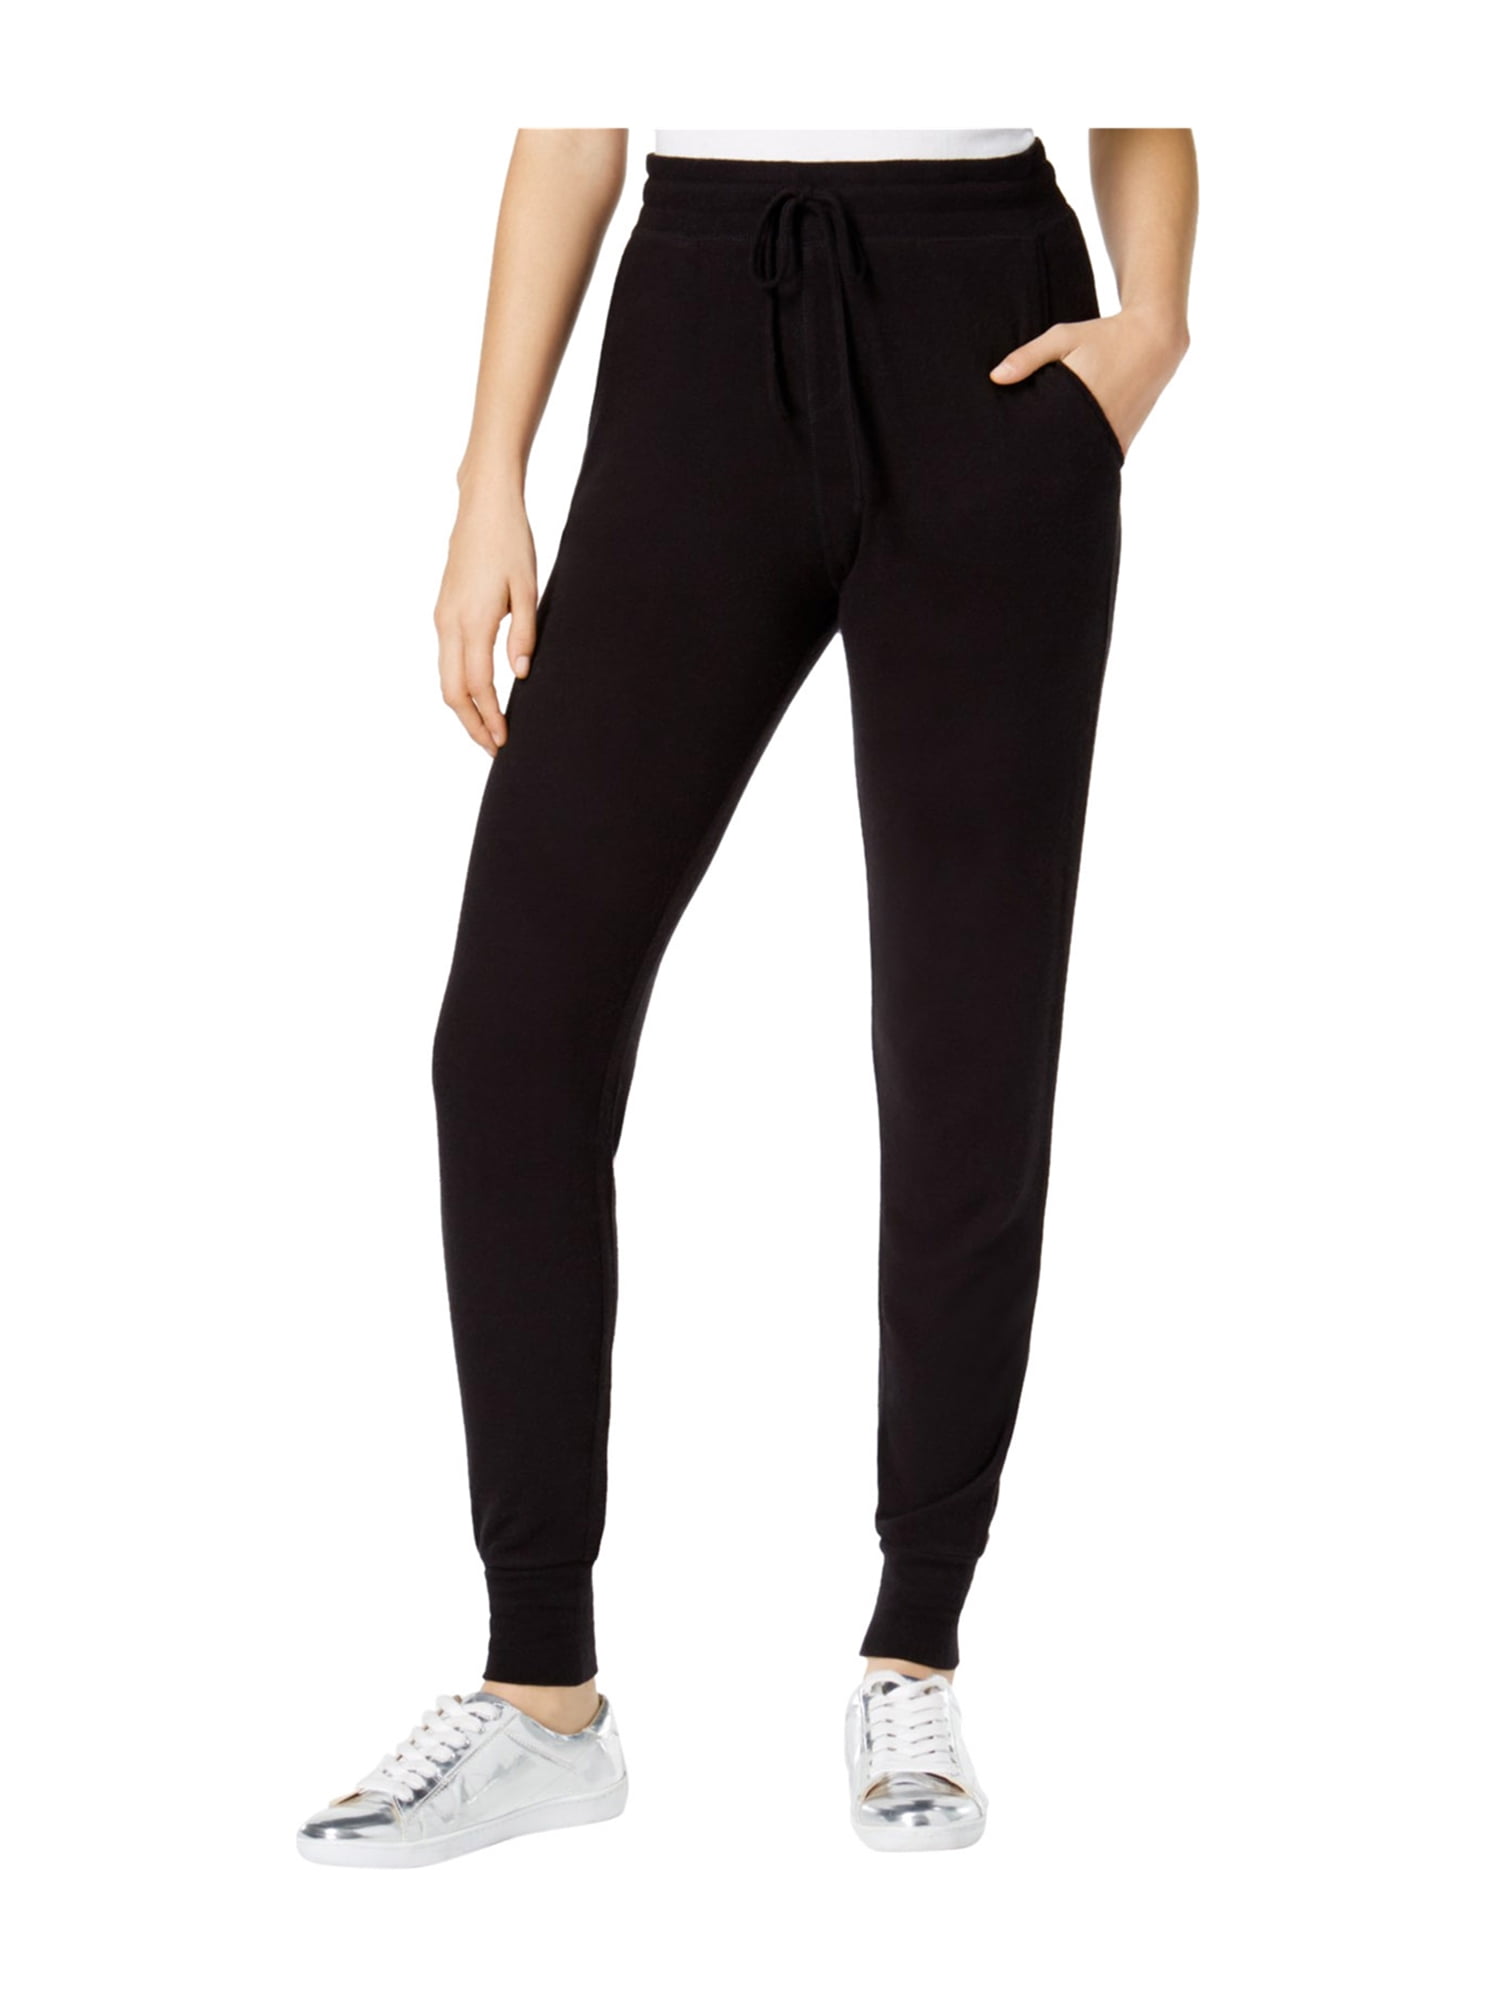 GUESS Womens Soft Casual Jogger Pants jetblack XL/32 | Walmart Canada